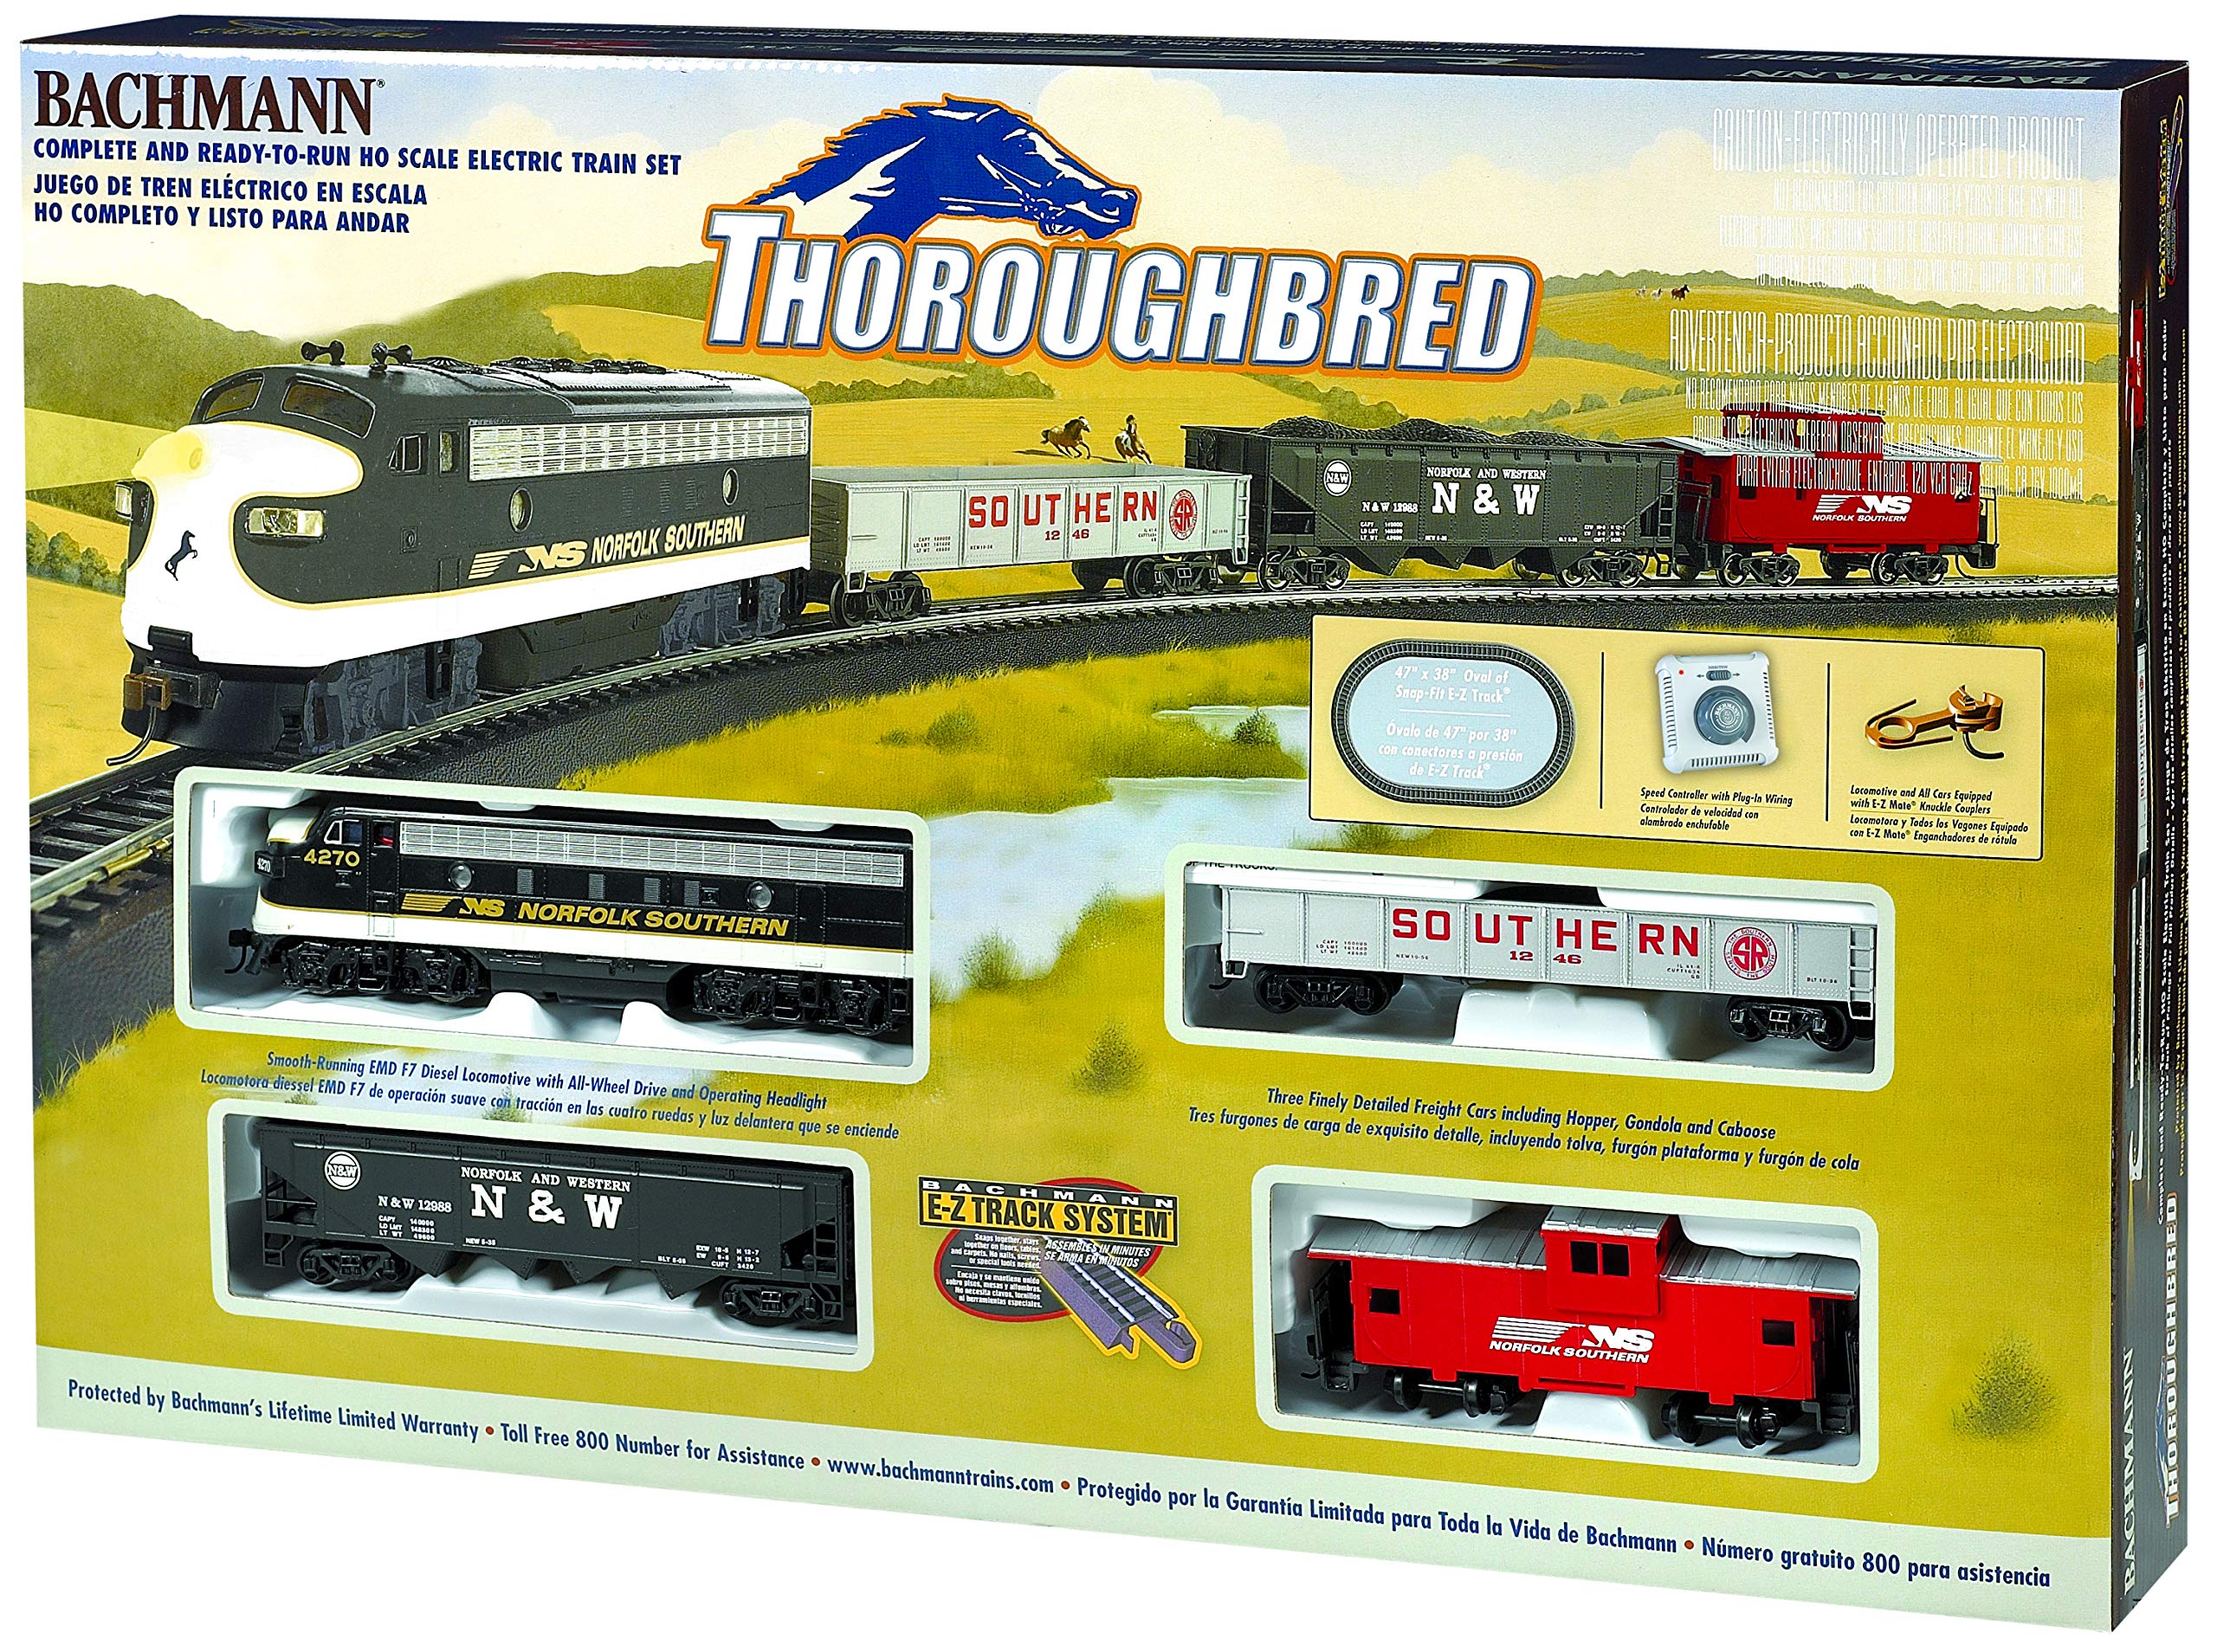 Bachmann Trains - Thoroughbred Ready To Run Electric Train Set - HO Scale